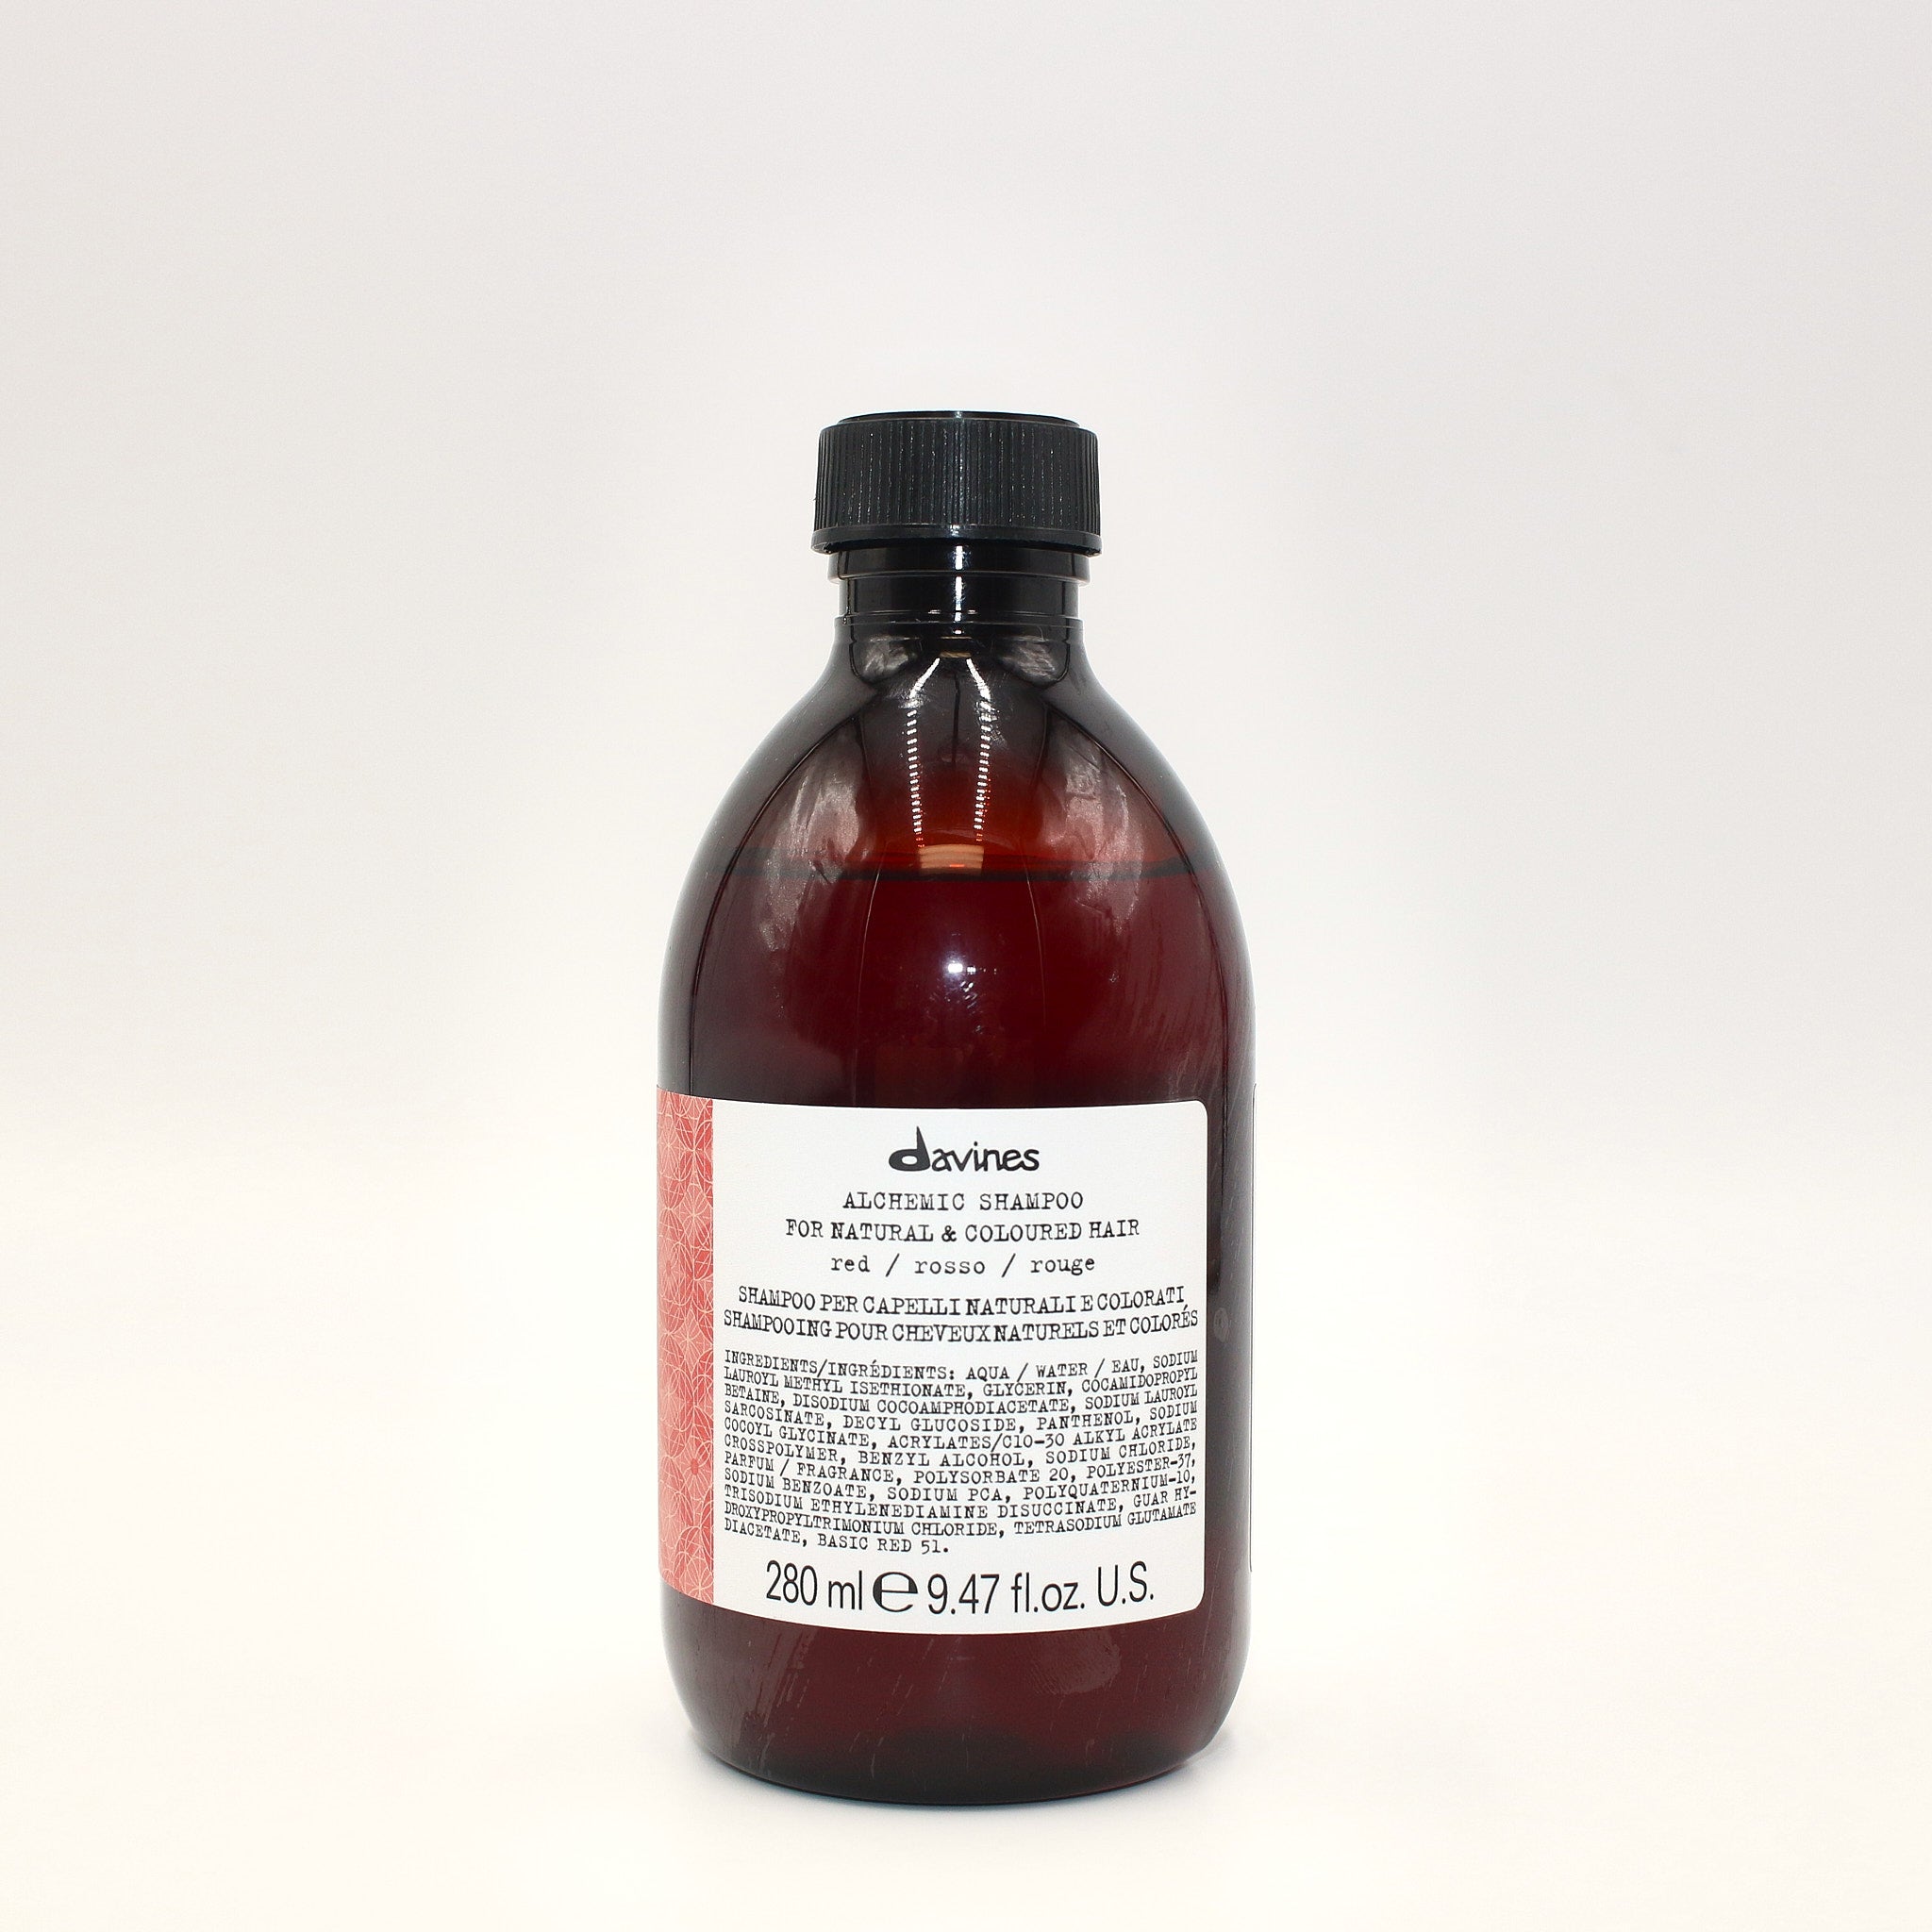 Davines Alchemic Shampoo Red 9.47 oz